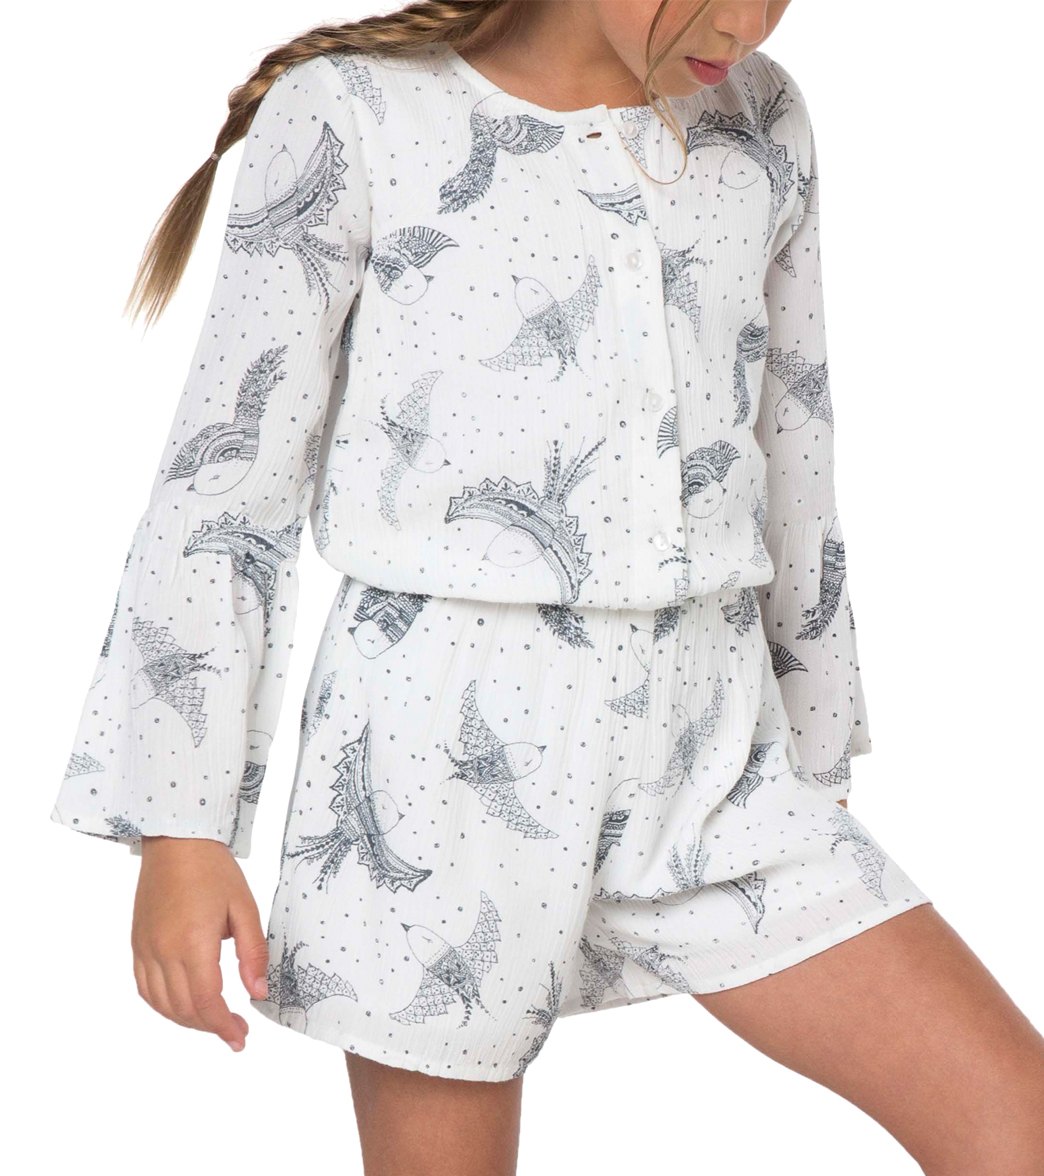 O'neill Girls' Lana Long Sleeve Romper Toddler - White 2T Cotton - Swimoutlet.com